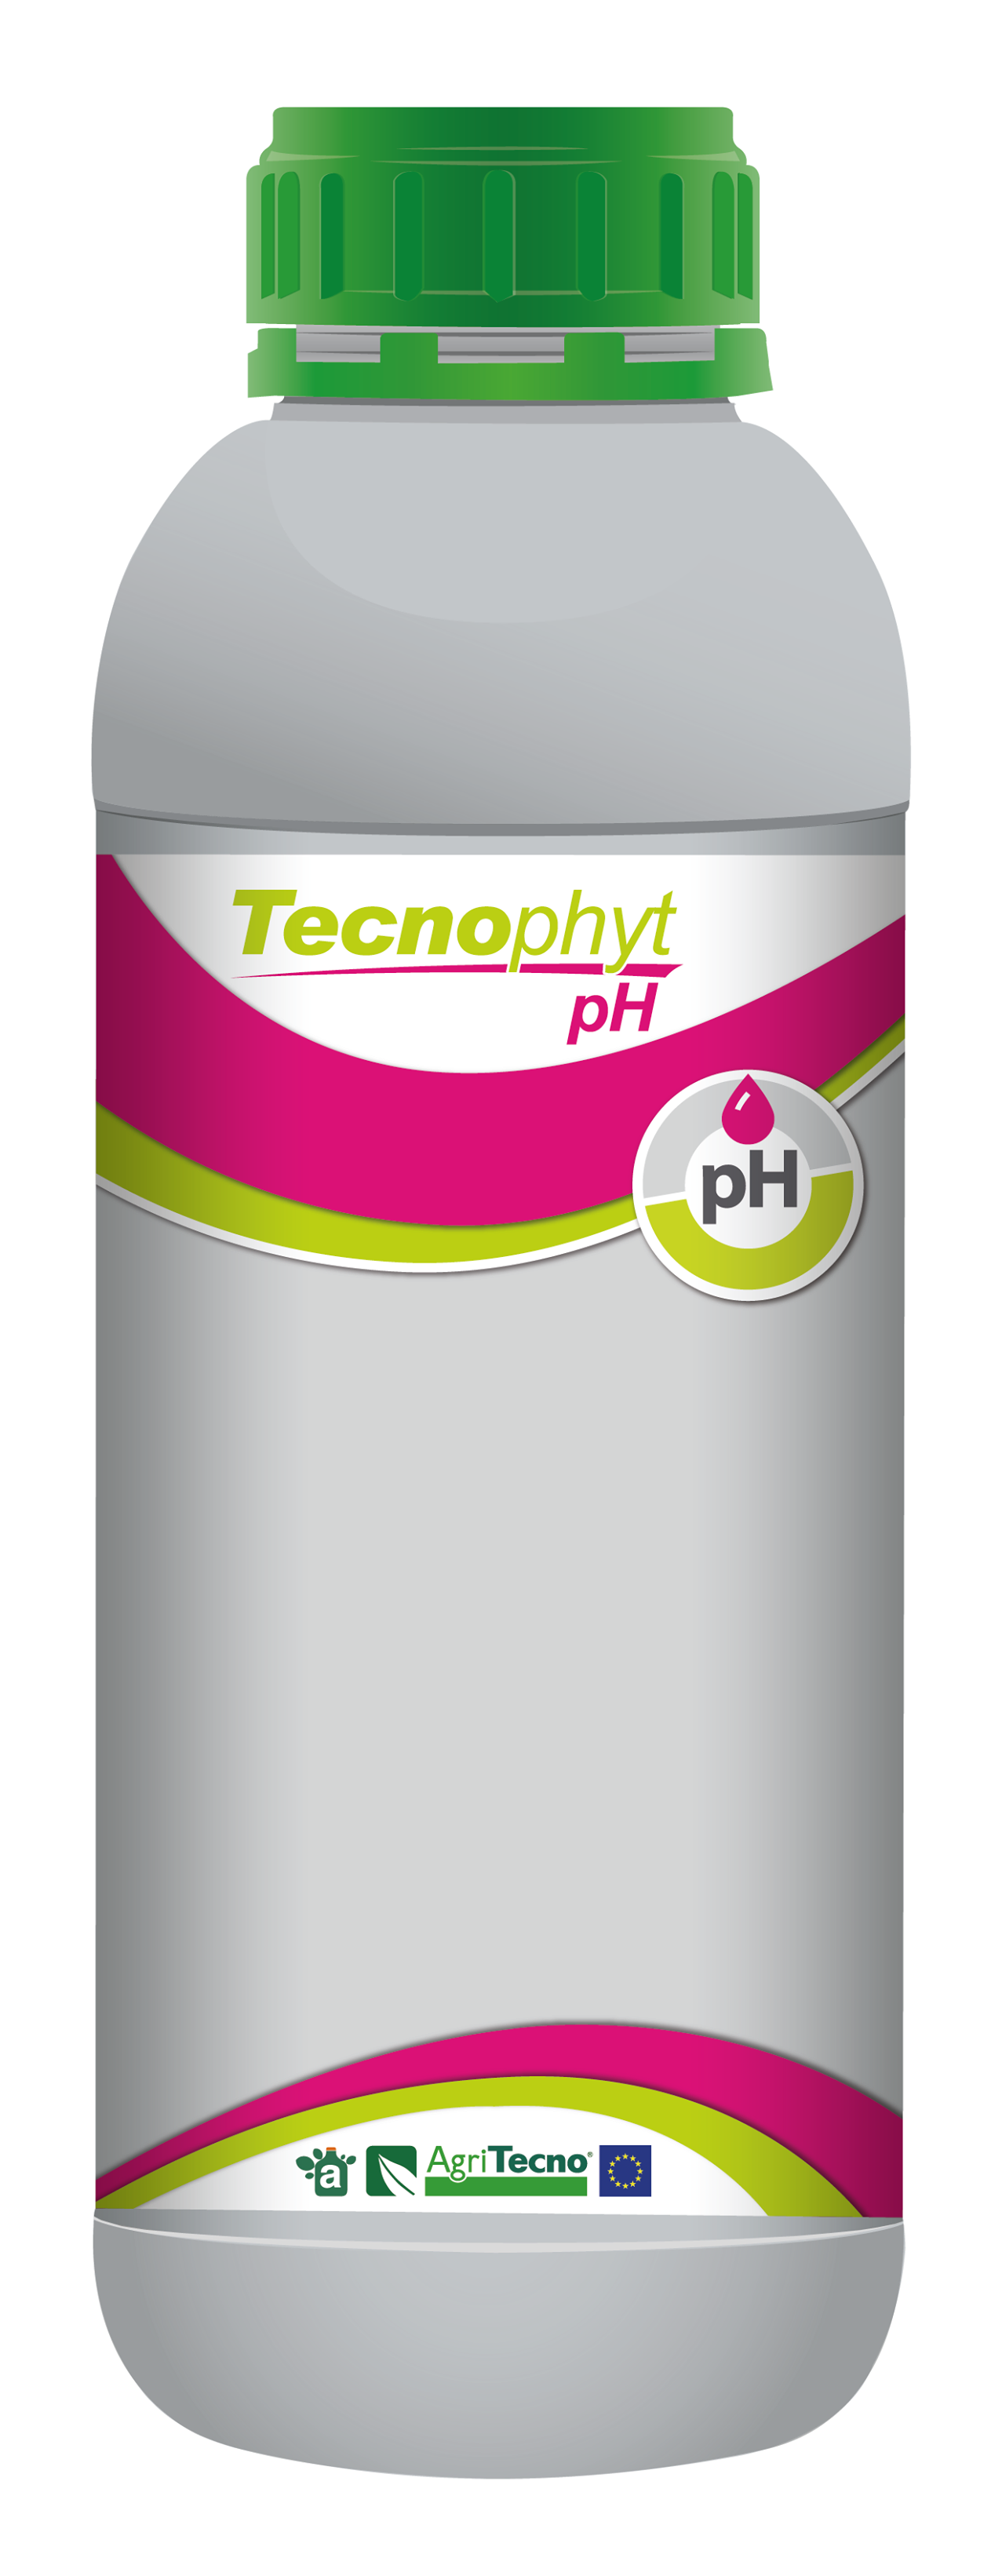 Tecnophyt pH.
 1. Adjuvant in prepararea solutiilor pentru stropit
 2. Acidifiant
 3. Reduce efectele negative ale apei dure
 4. Indicator de pH
 5. Surfractant
 6. Antispumant
 7. Efect anti-drift
…